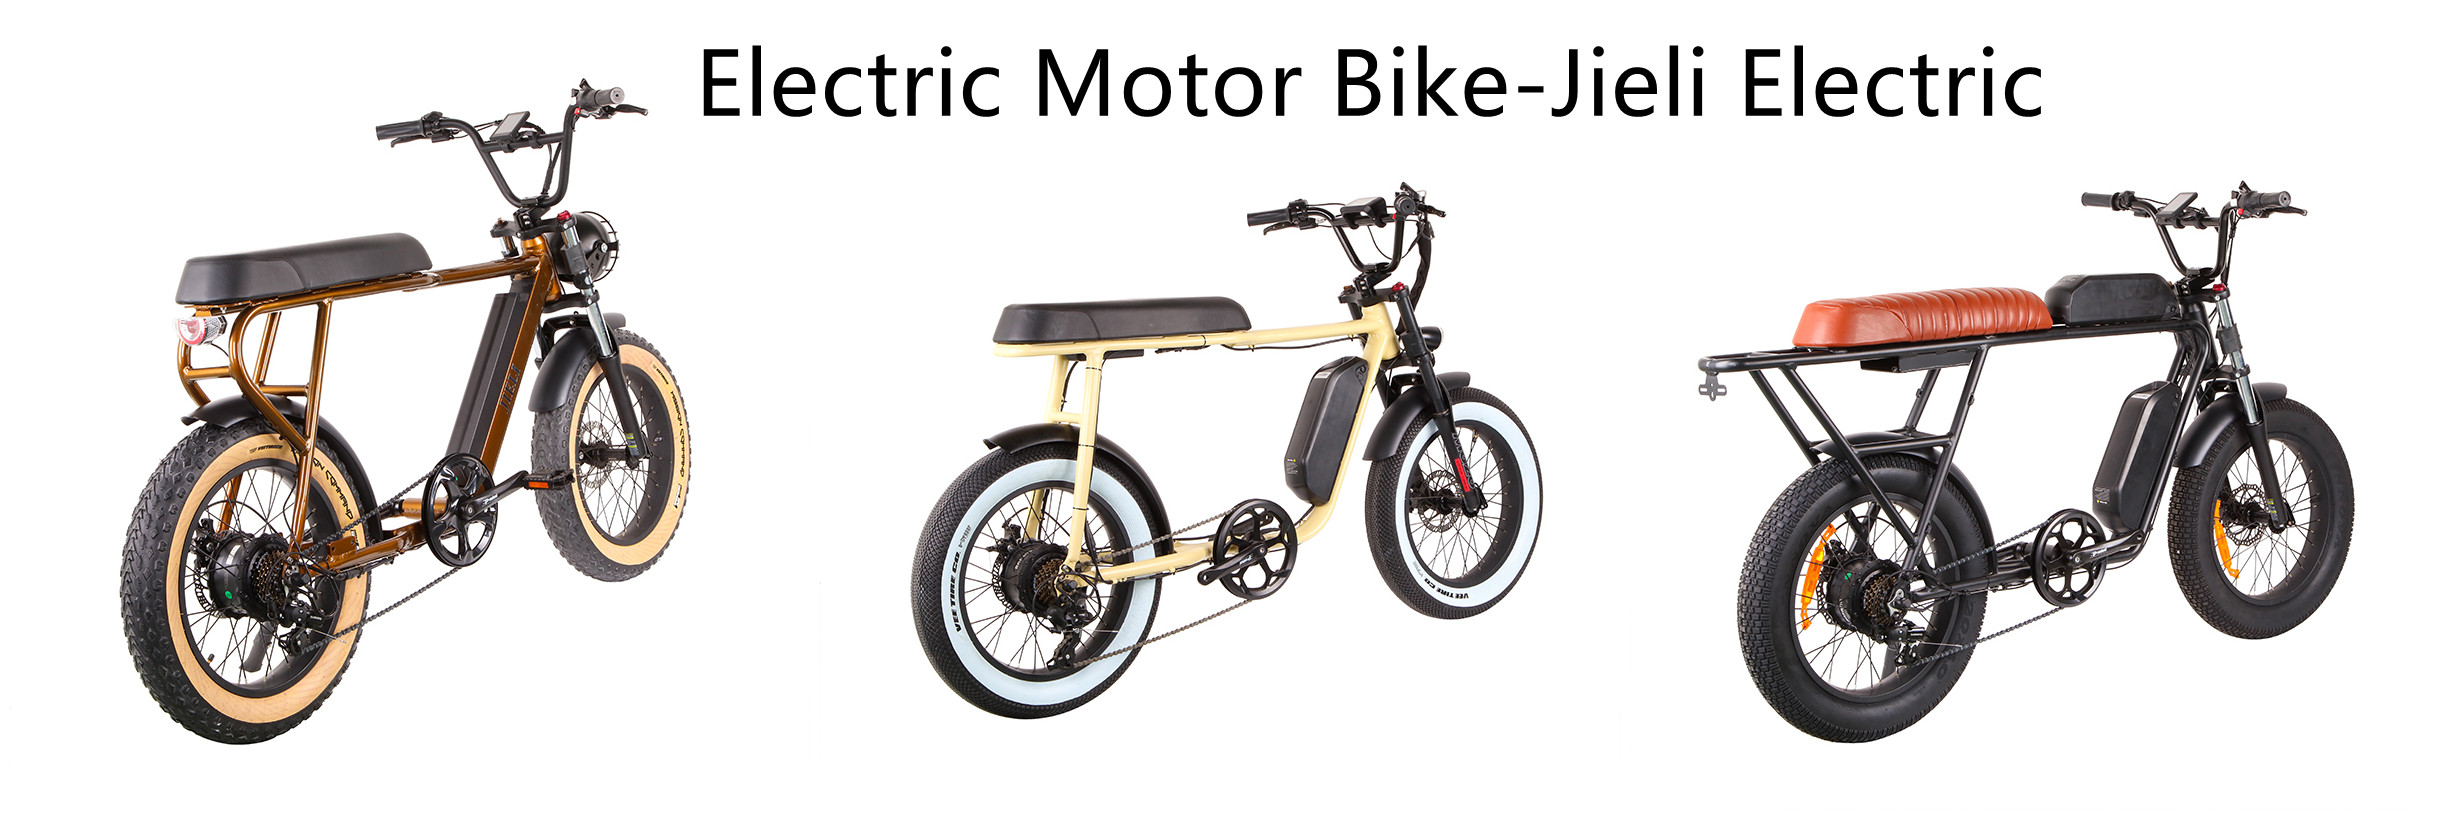 electric motor bikes